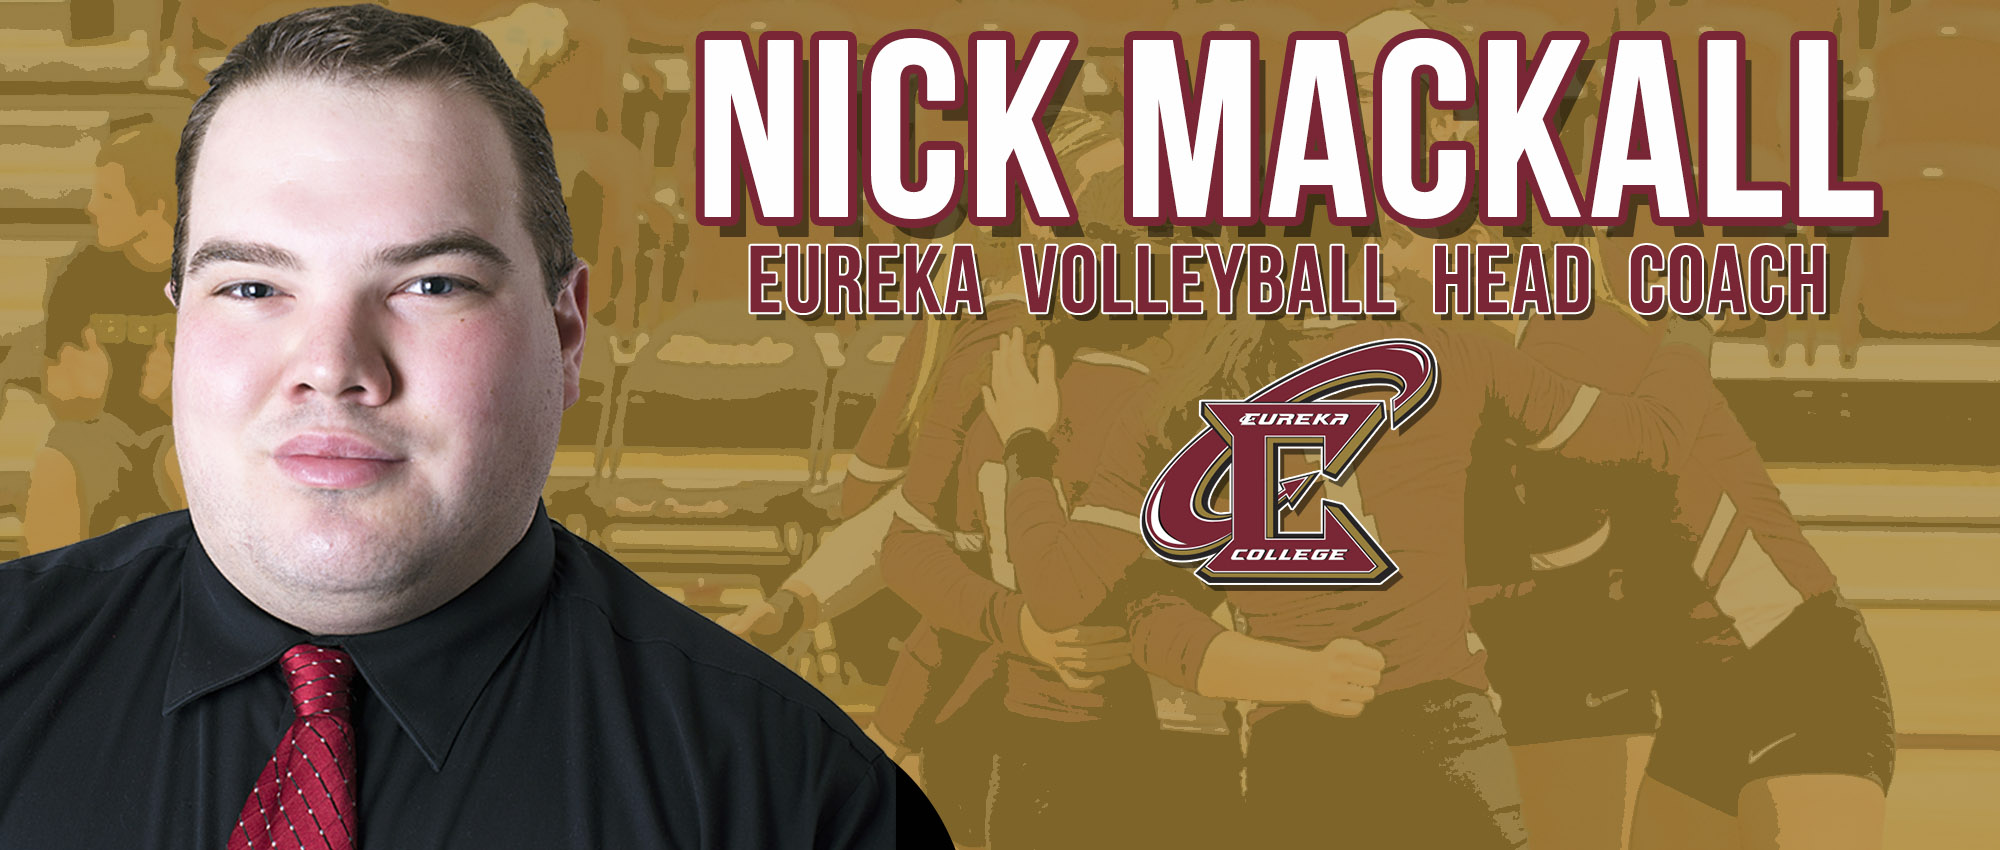 Nick Mackall Named Eureka College Volleyball Head Coach